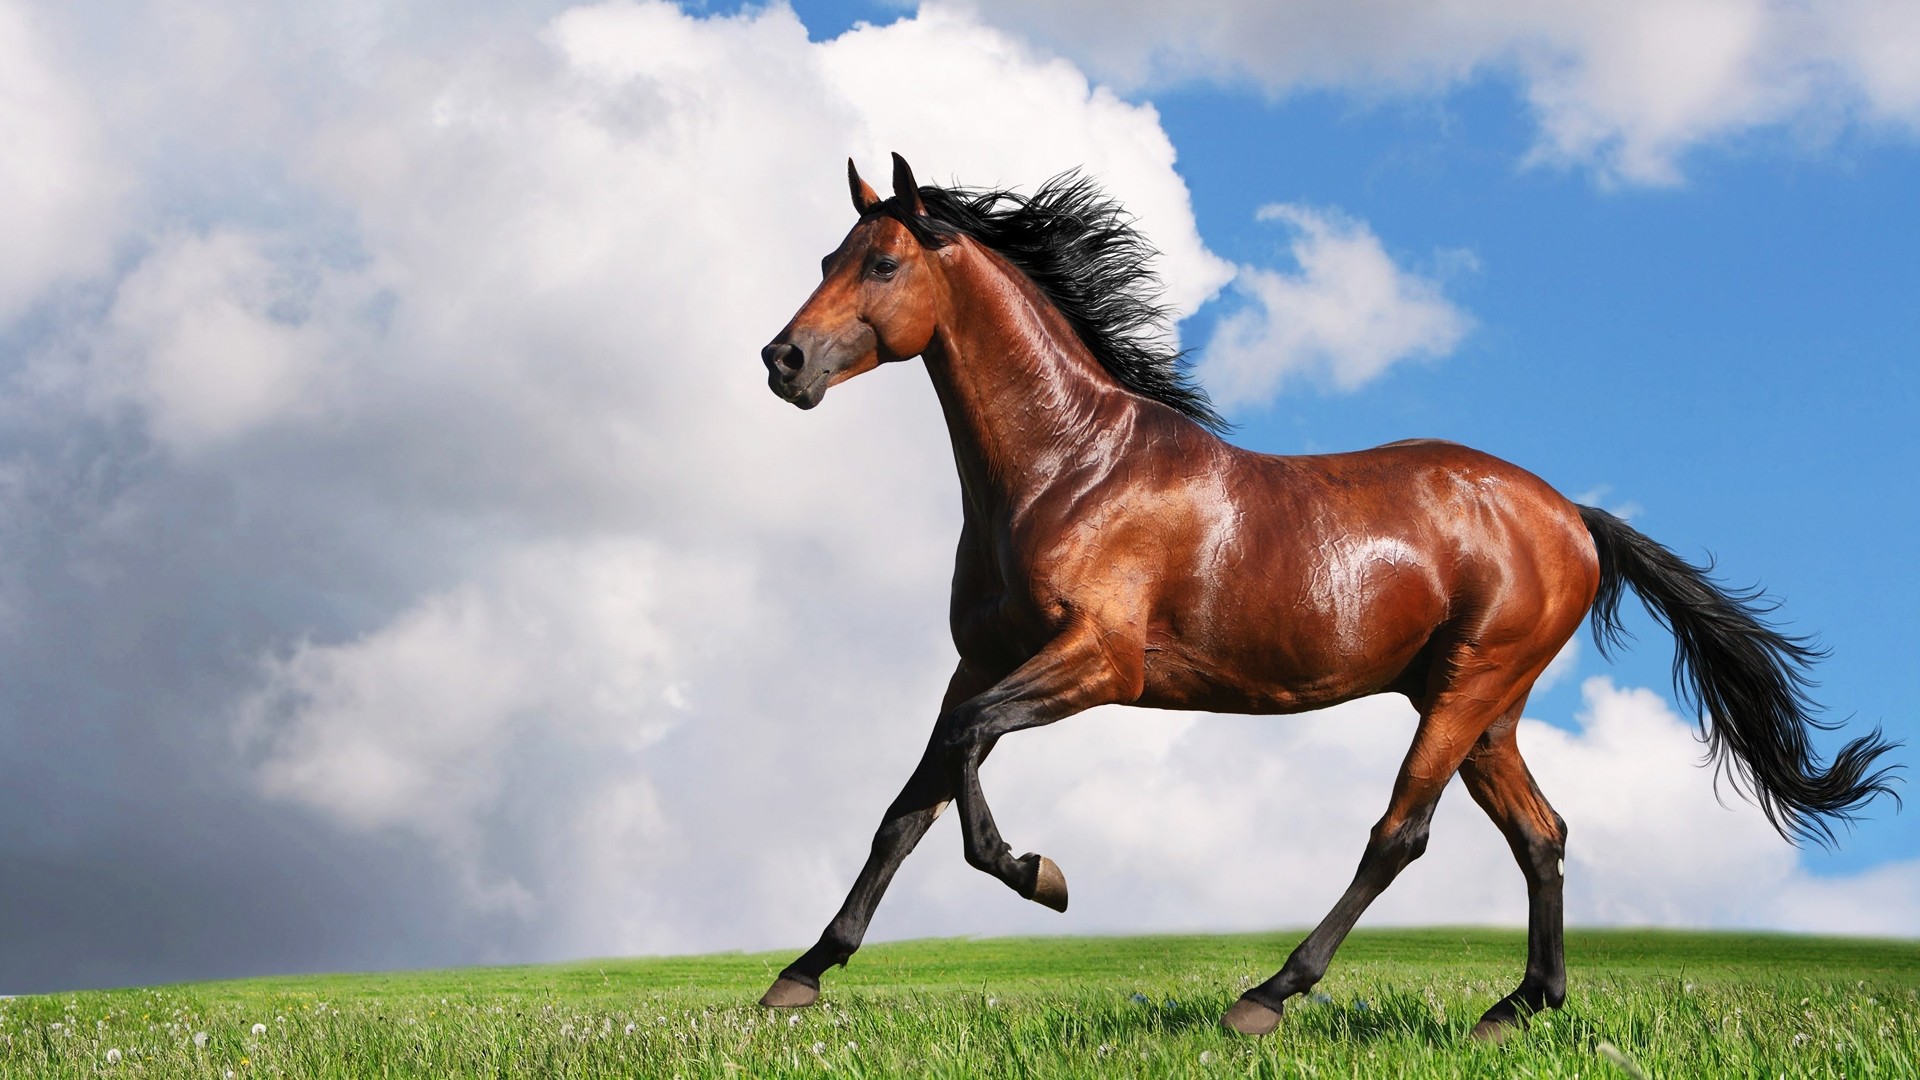 Arabian Horse Photo Gallery Wallpaper Image